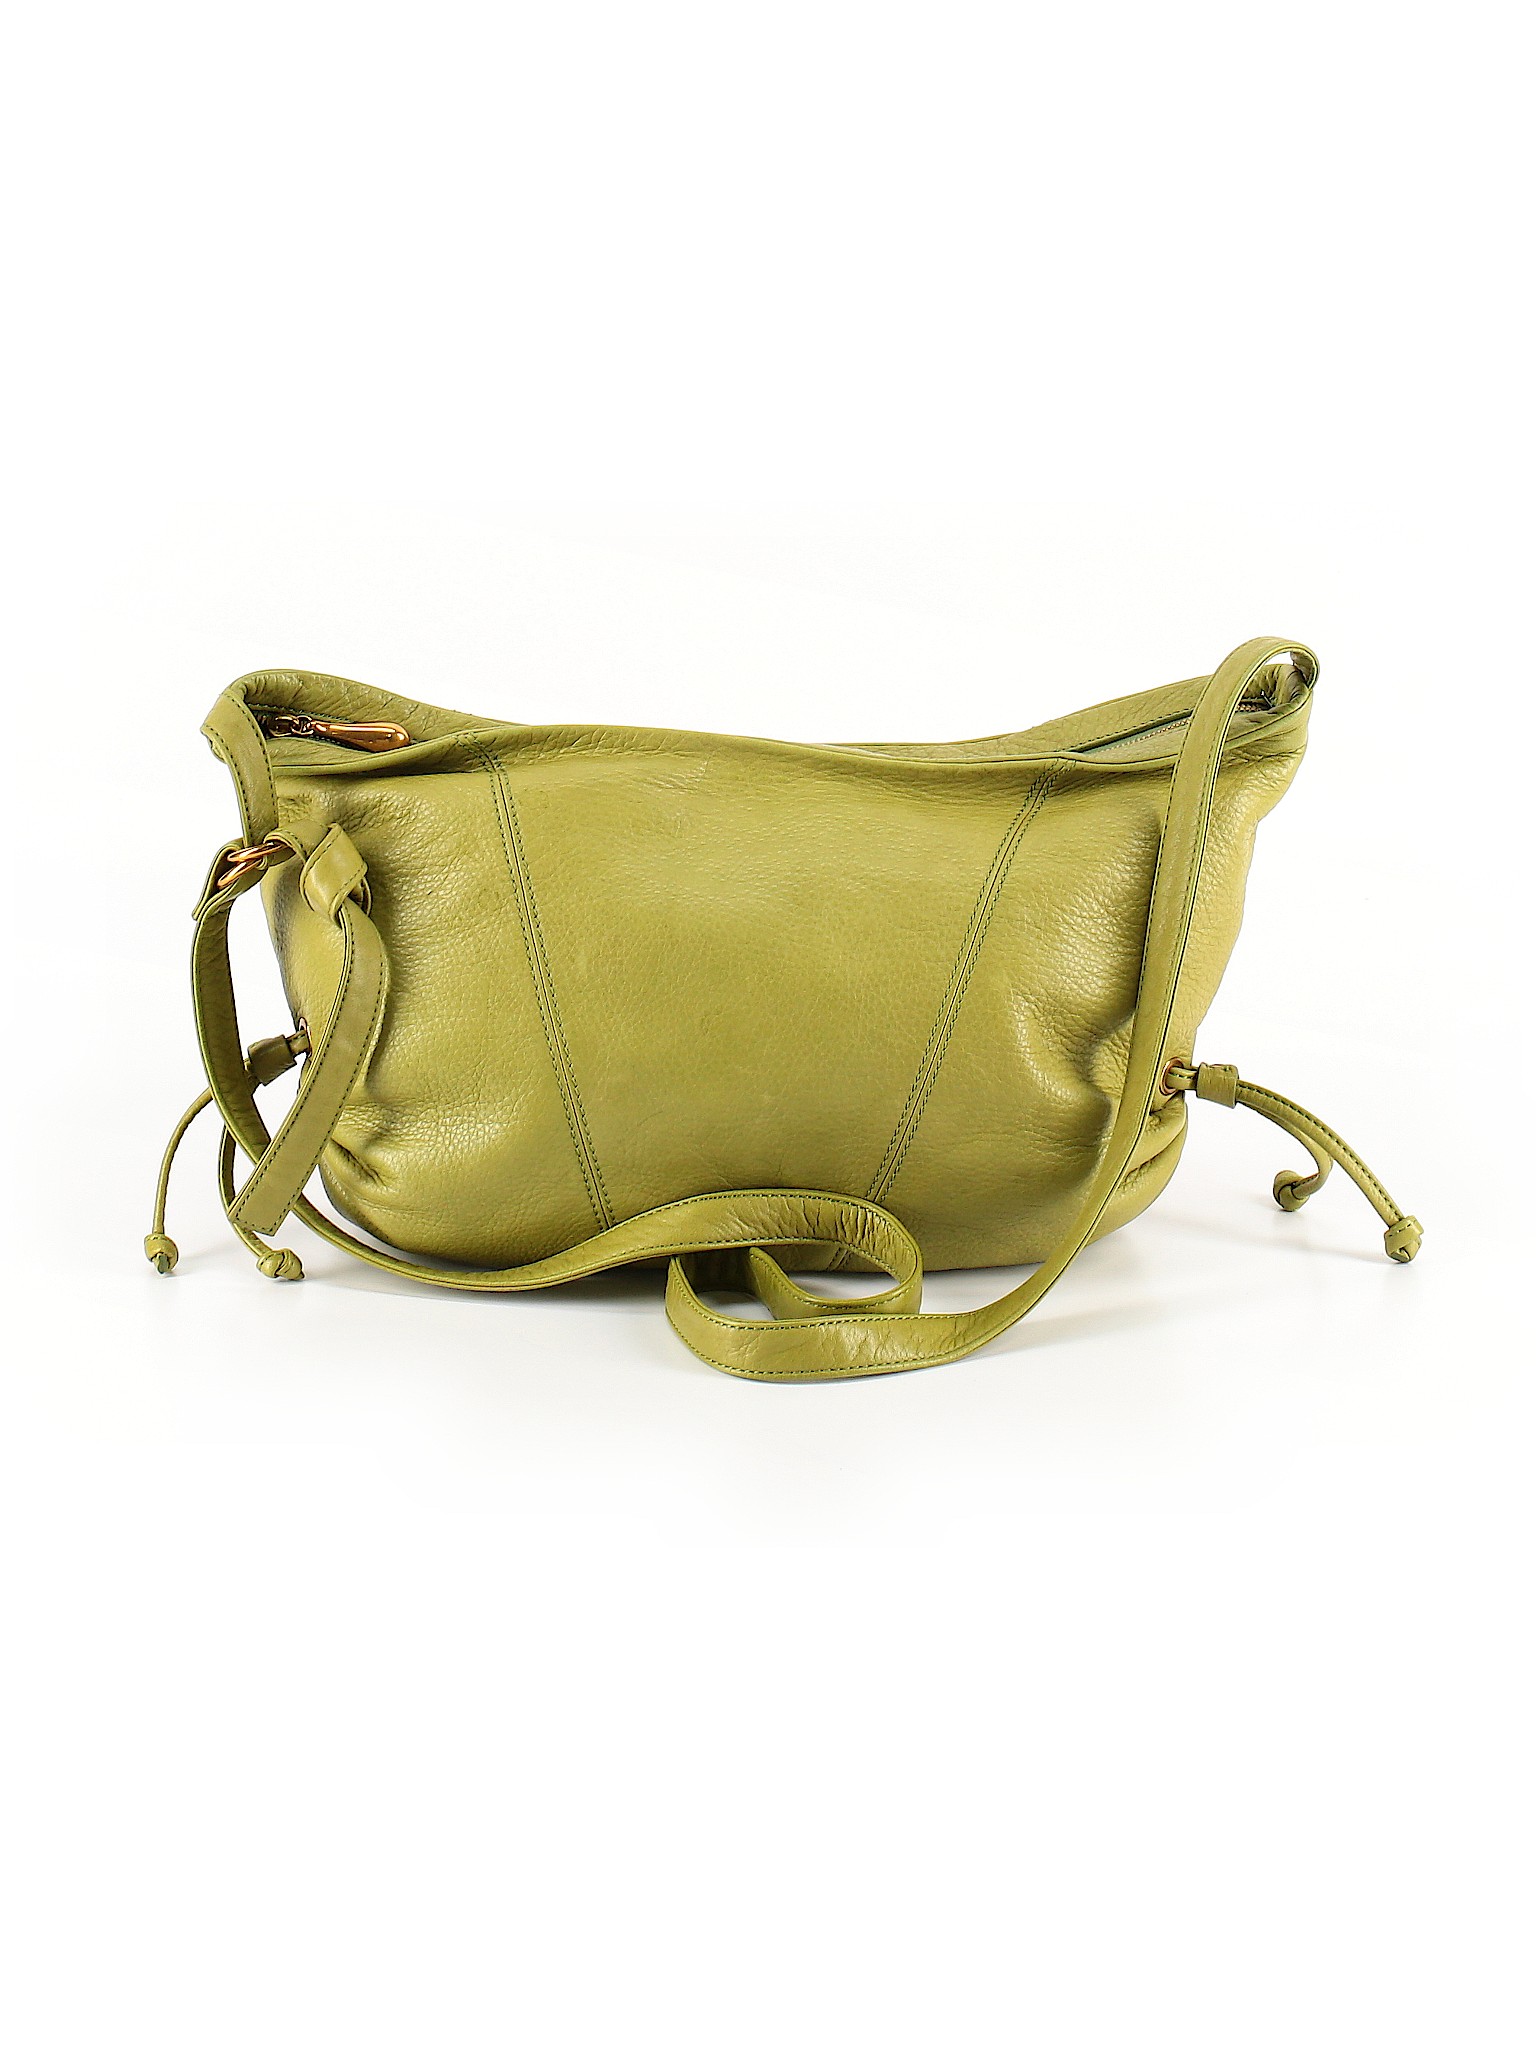 Hobo The Original Women Green Leather Crossbody Bag One Size | eBay